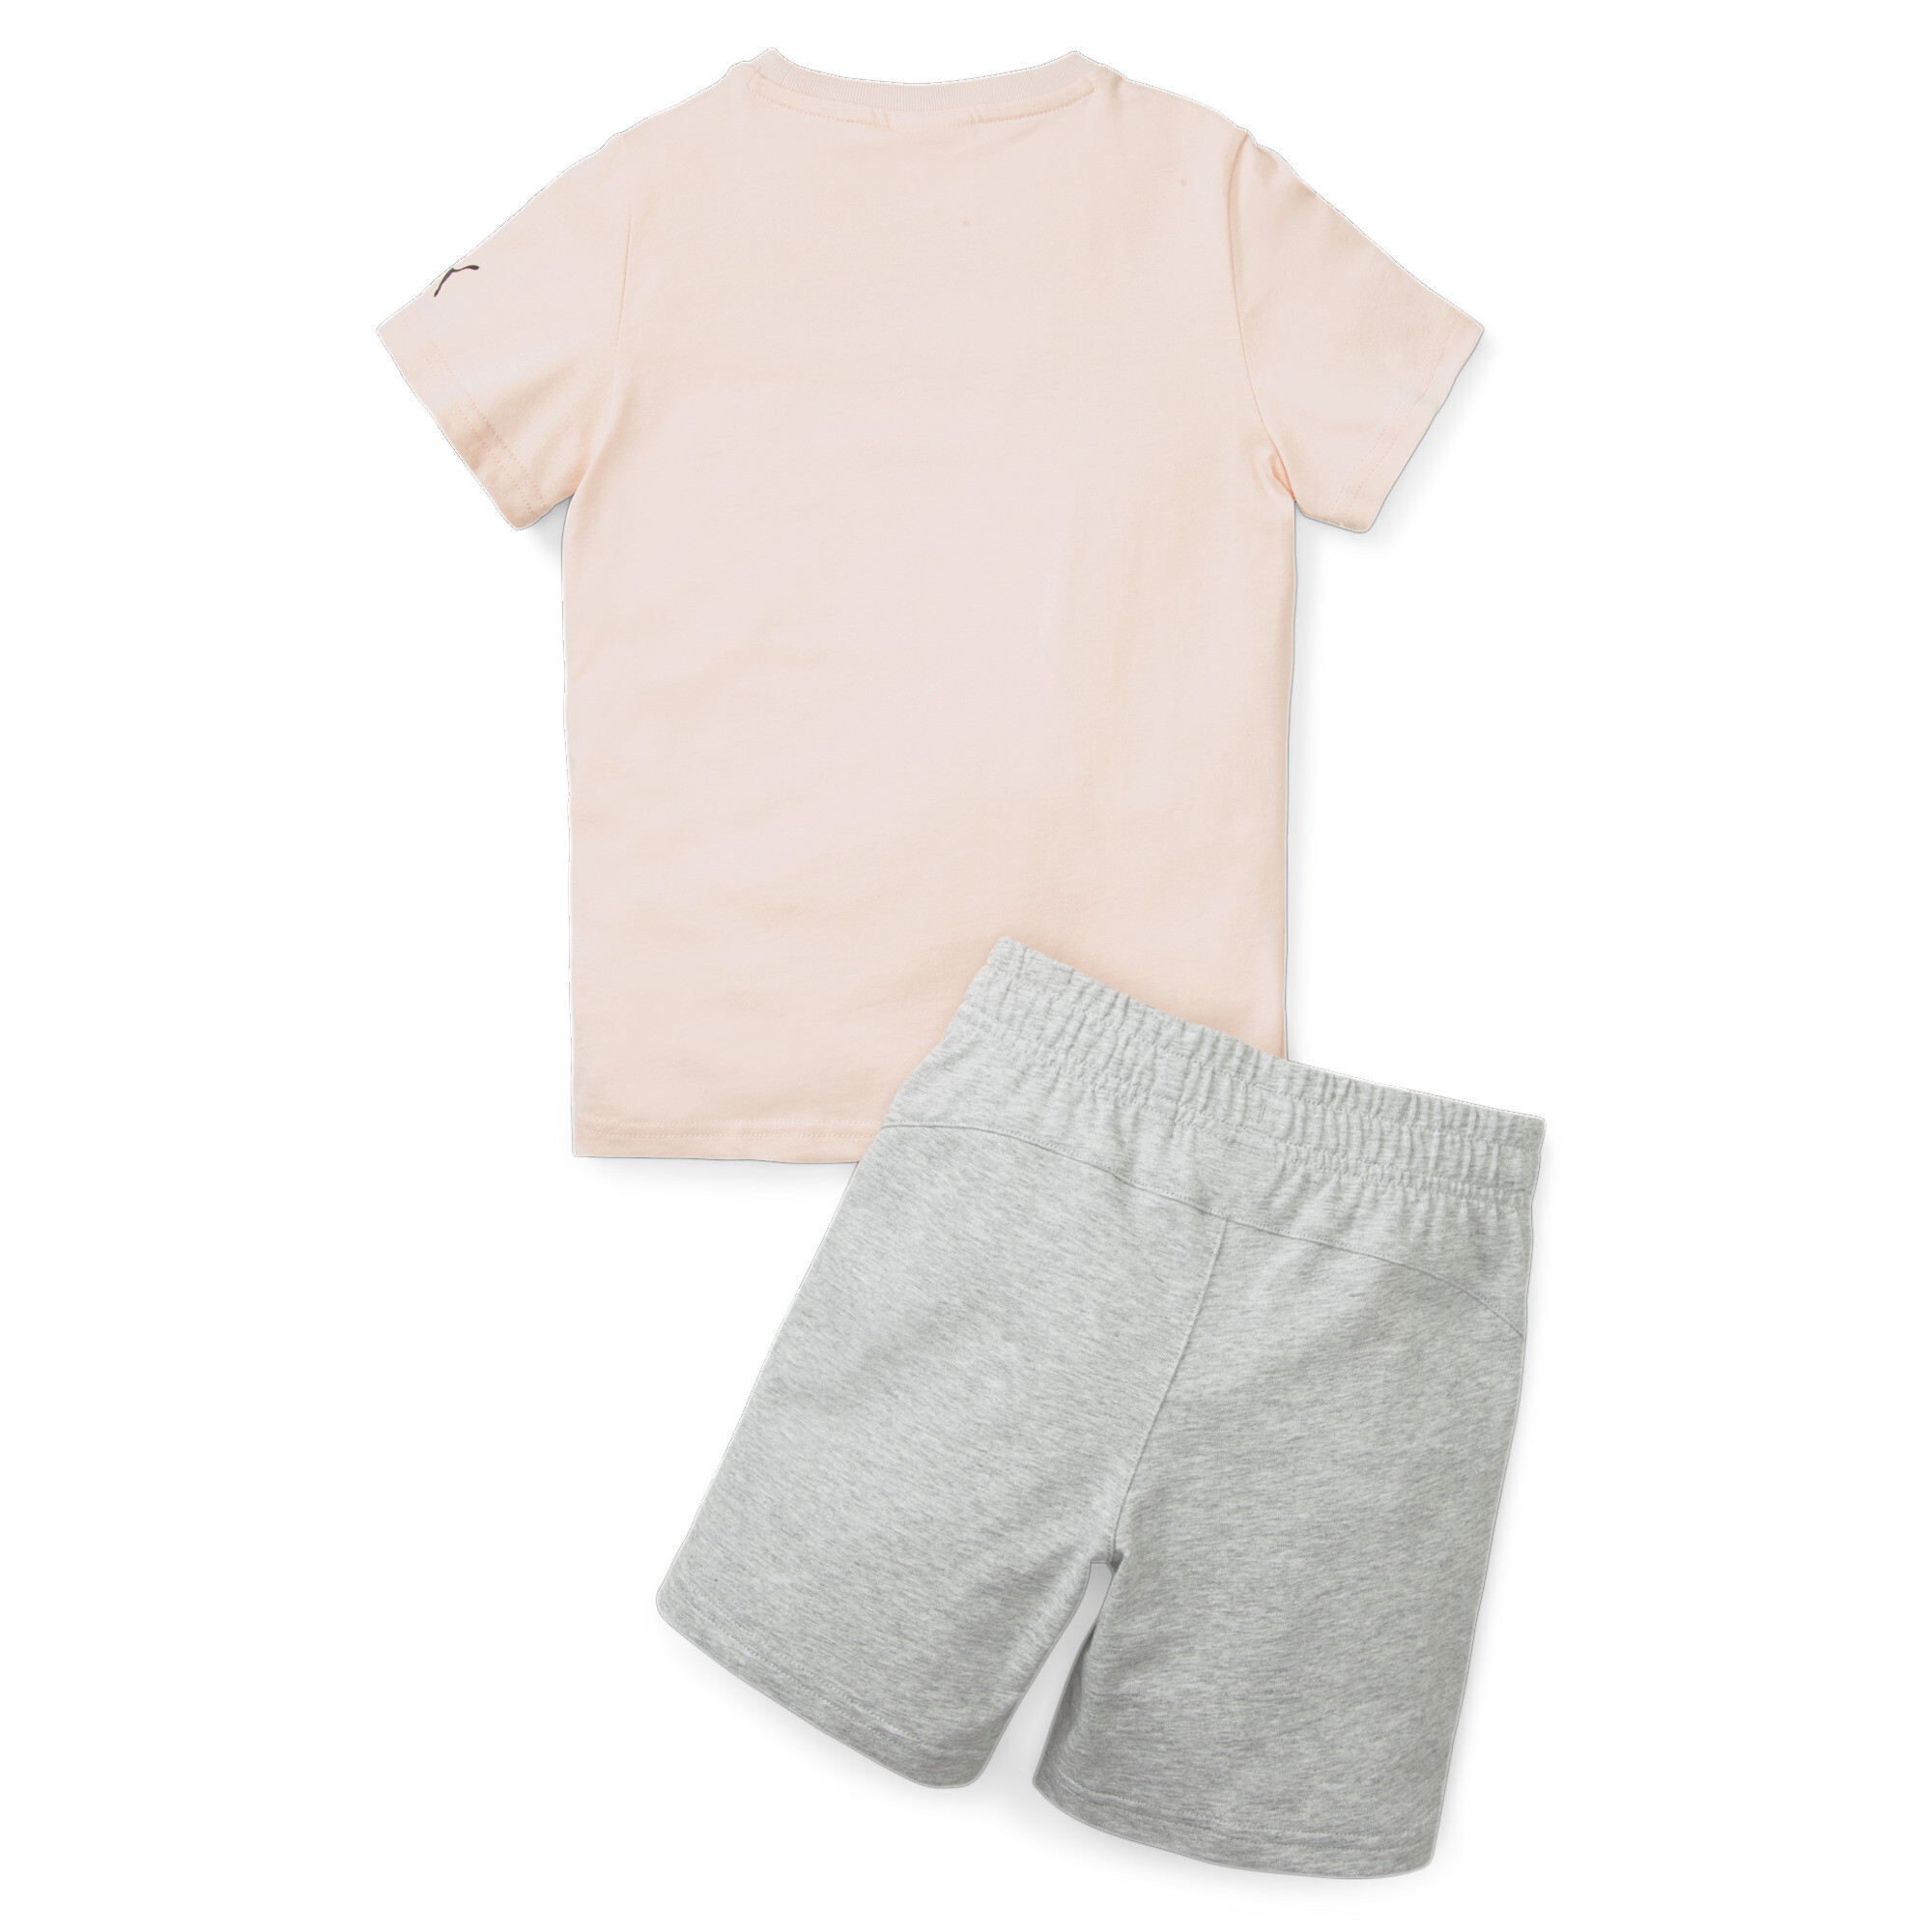 Puma X SPONGEBOB Tee And Shorts Set Kids, Pink, Size 11-12Y, Clothing